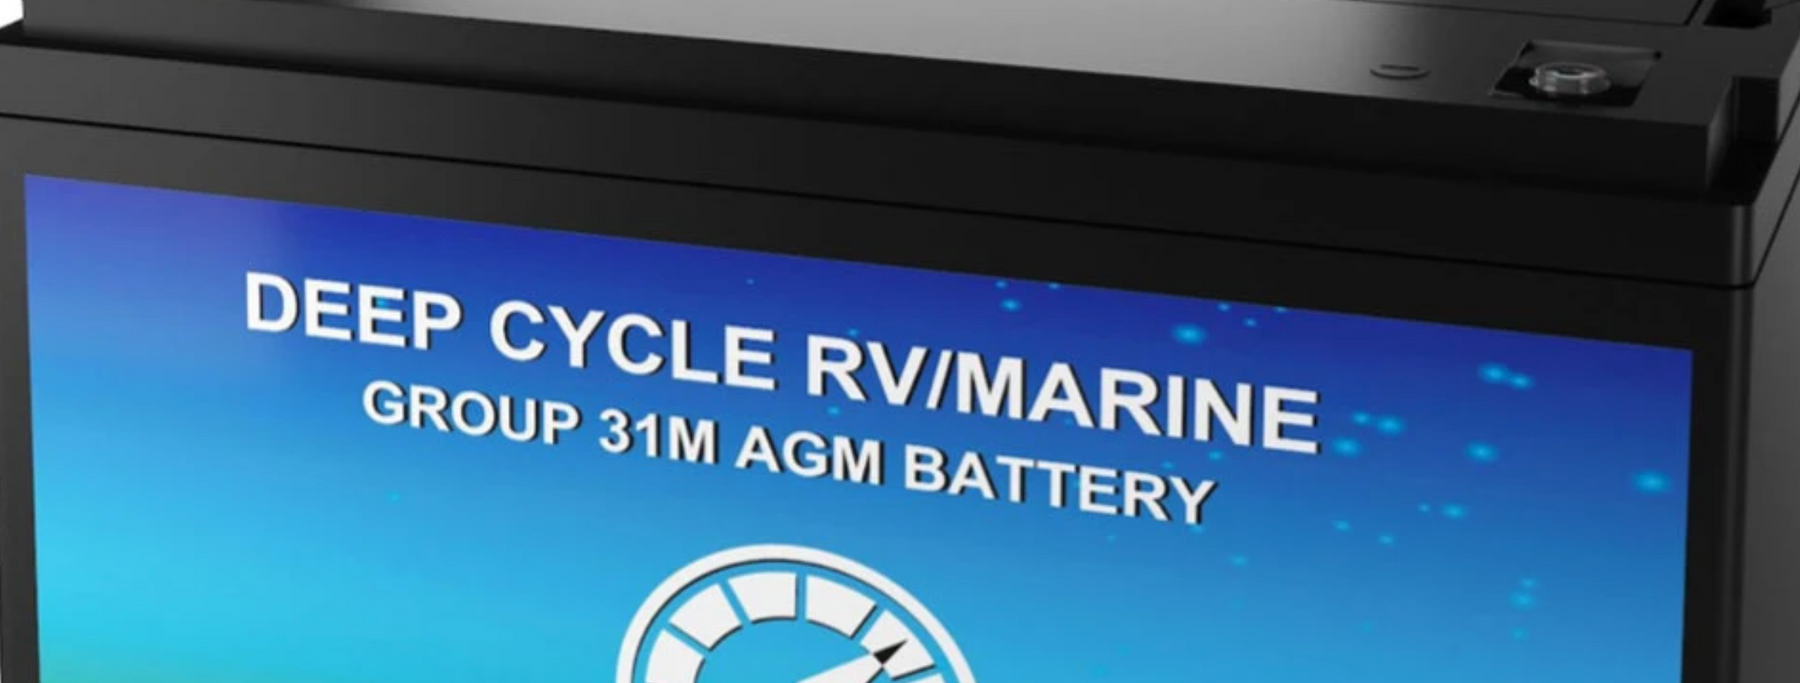 RV and marine battery